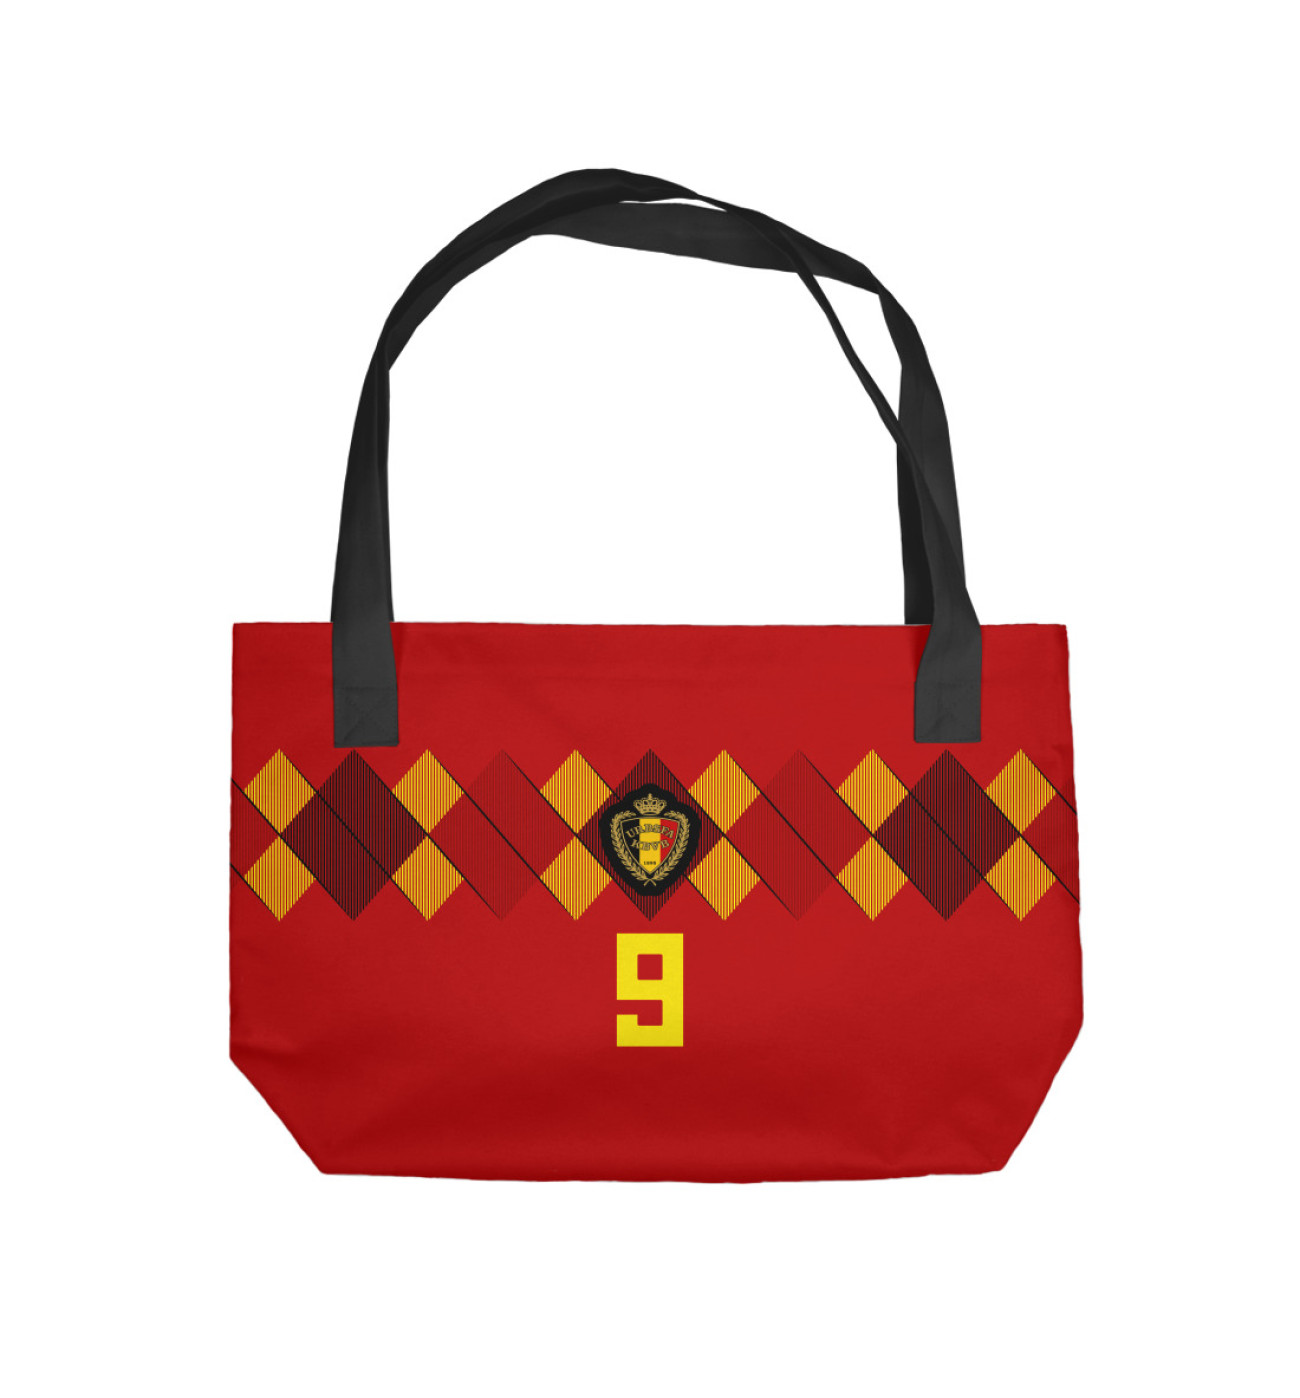 Пляжная сумка Ромелу Лукаку - Сборная Бельгии, артикул: FLT-352891-sup